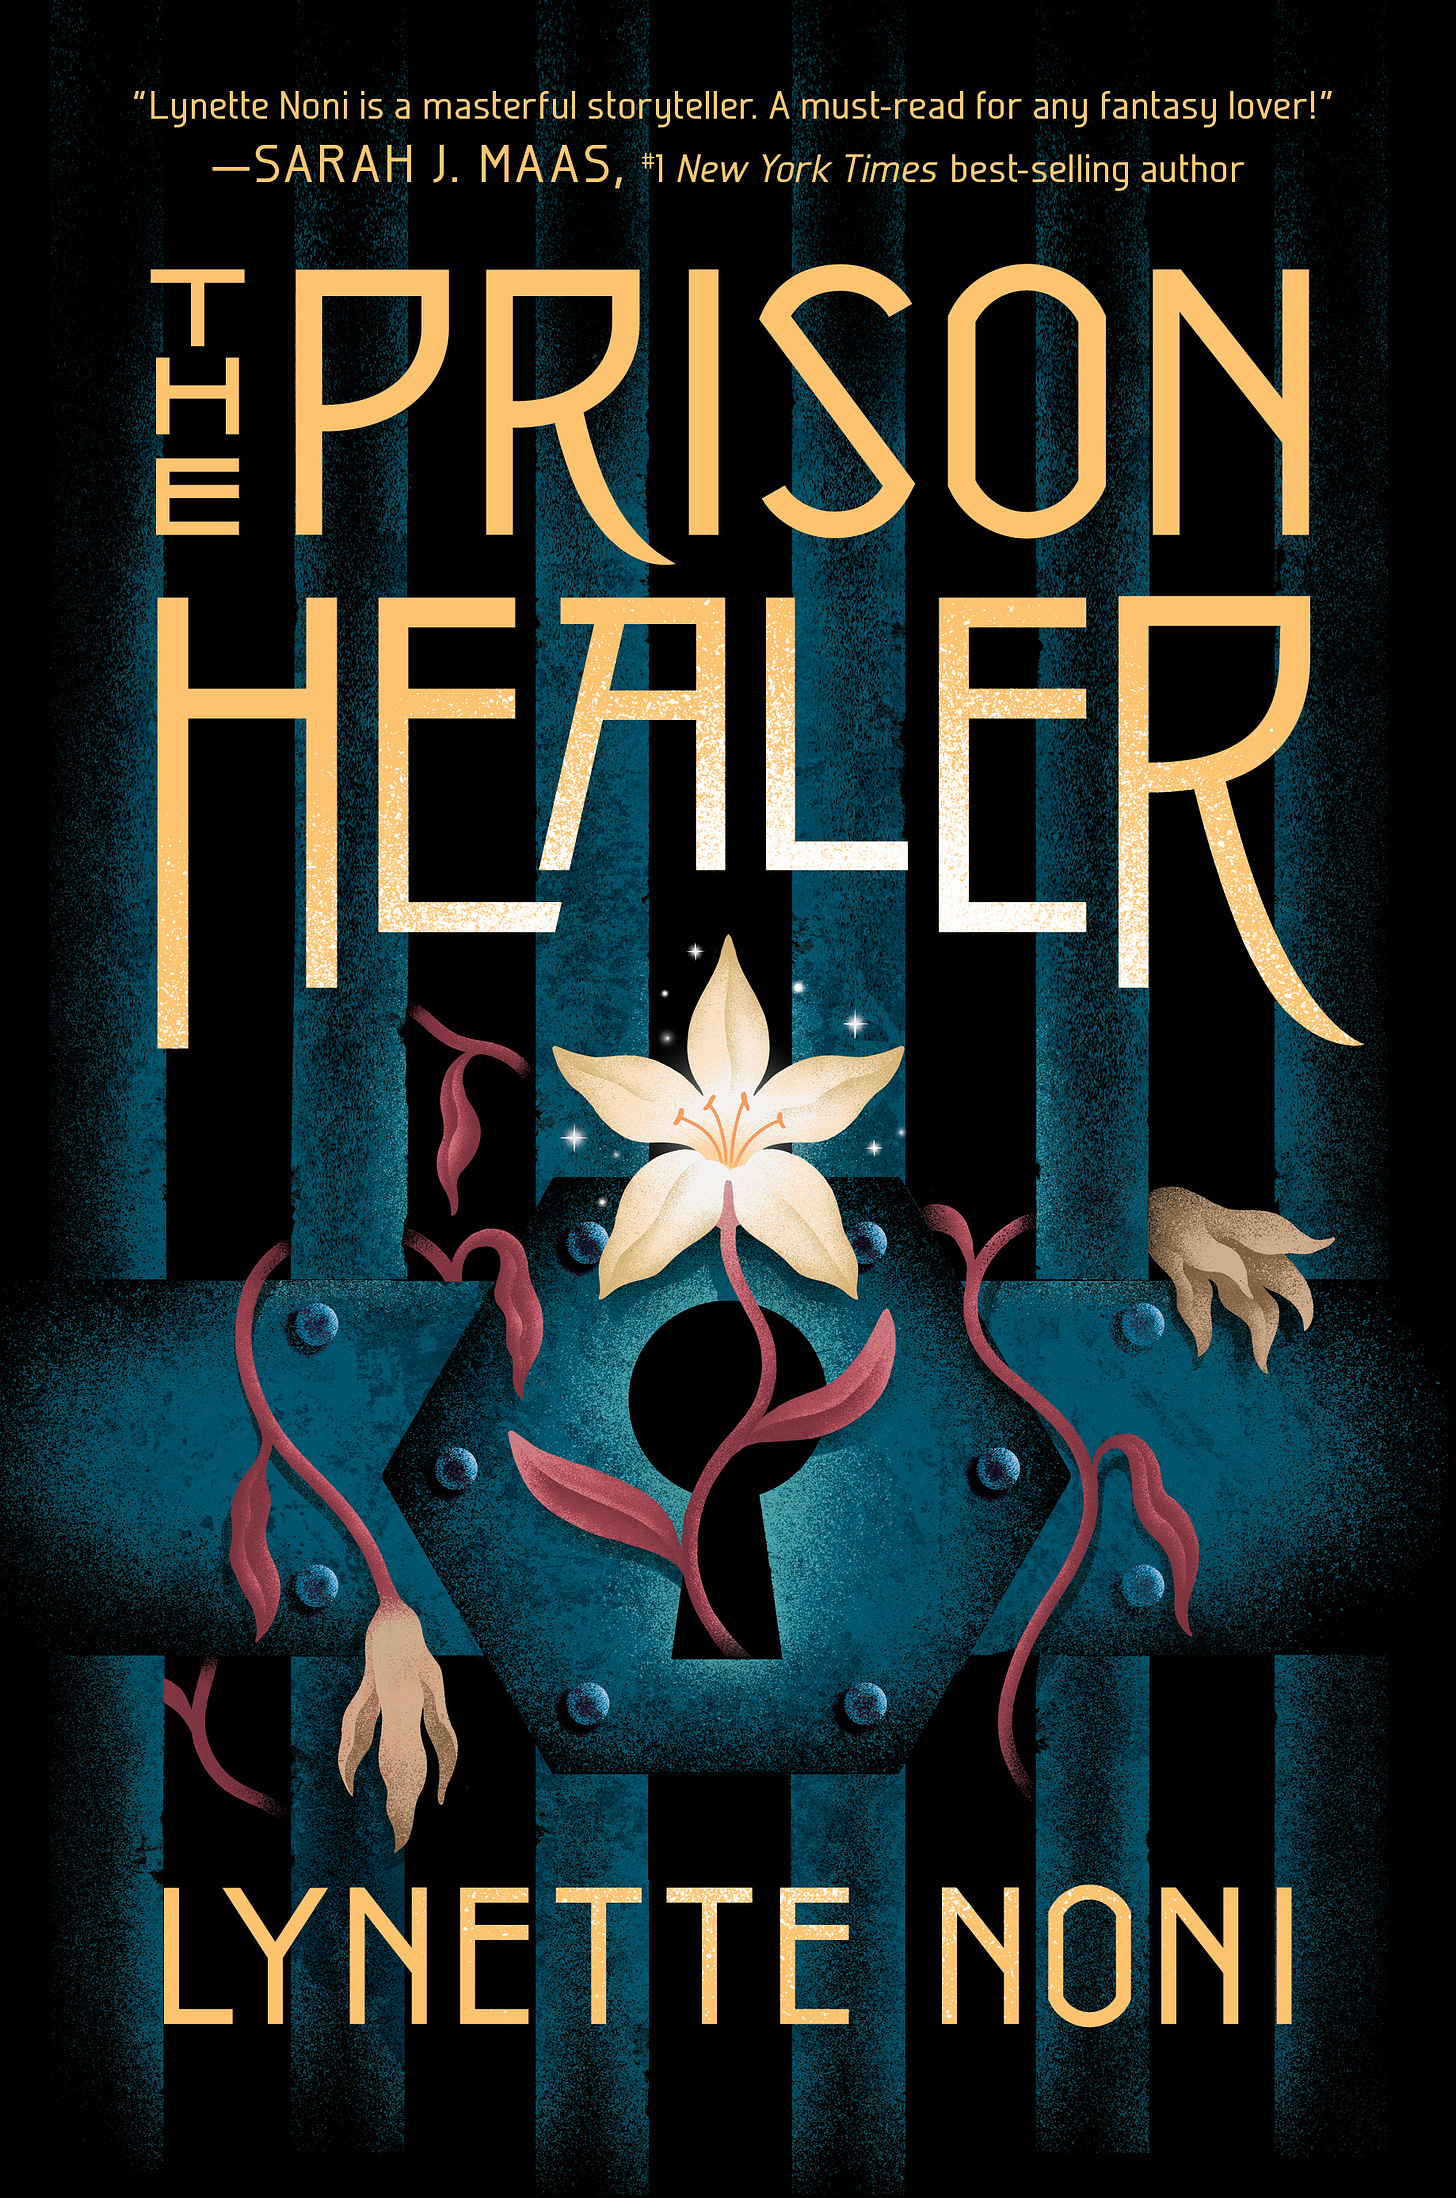 The Prison Healer (The Prison Healer, #1) by Lynette Noni | Goodreads